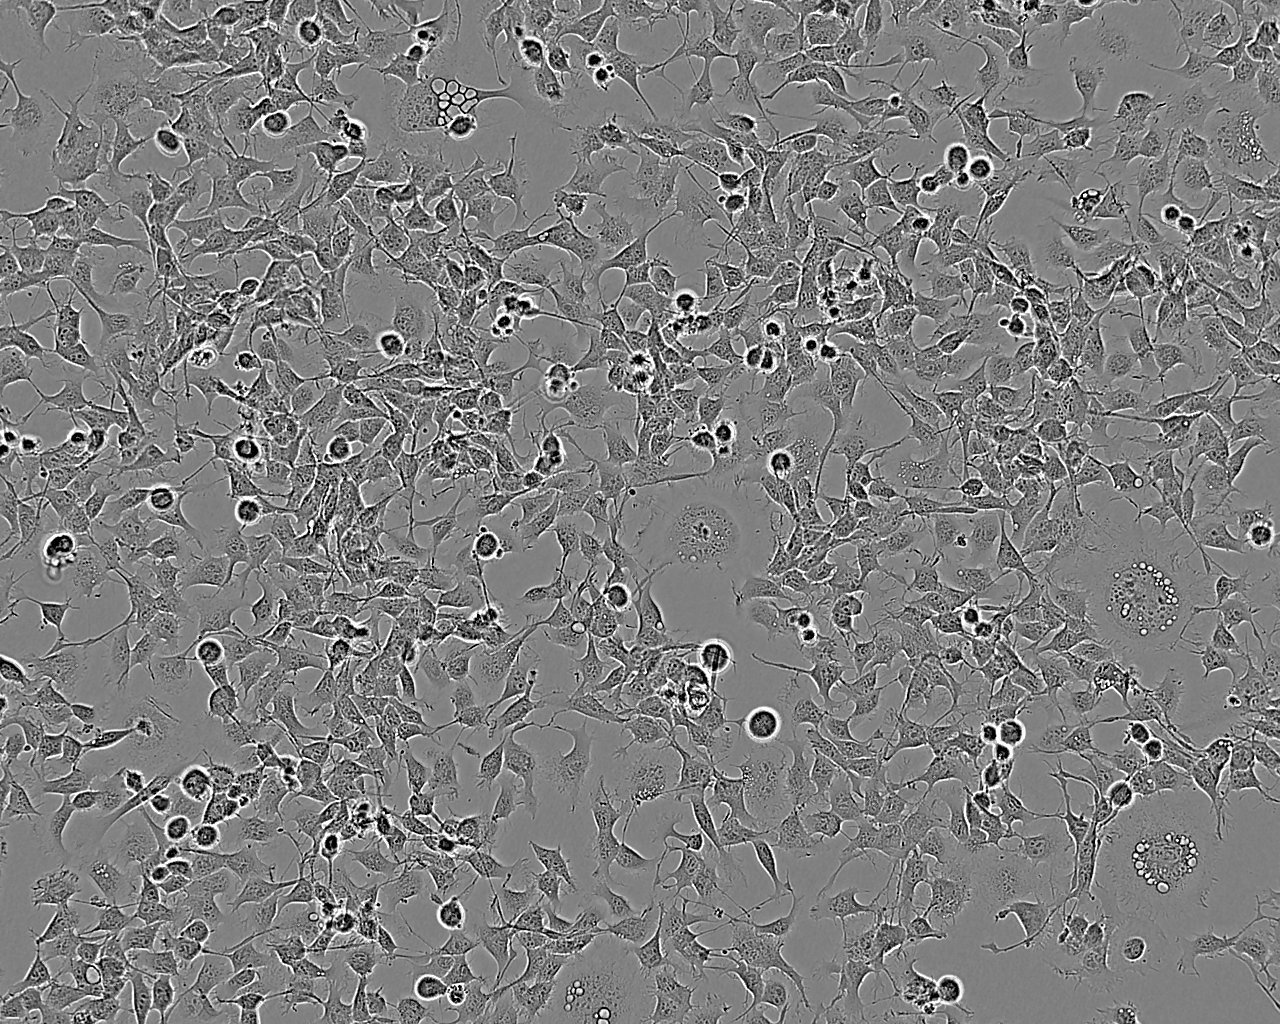 KU-19-19 cell line人膀胱癌细胞系